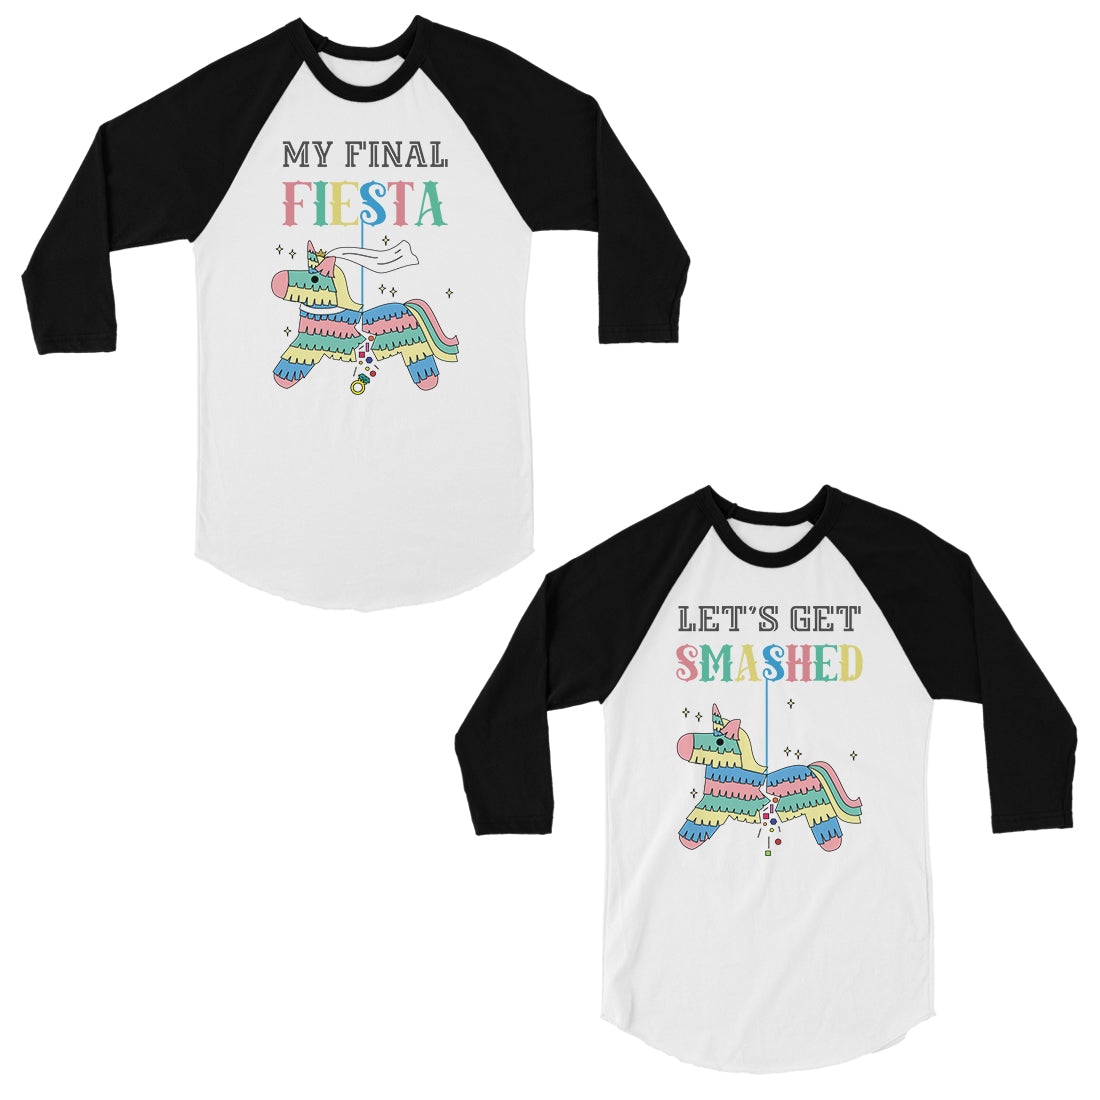 Final Fiesta Smashed Pinata Hilarious Fun Matching Baseball Jerseys Black and White